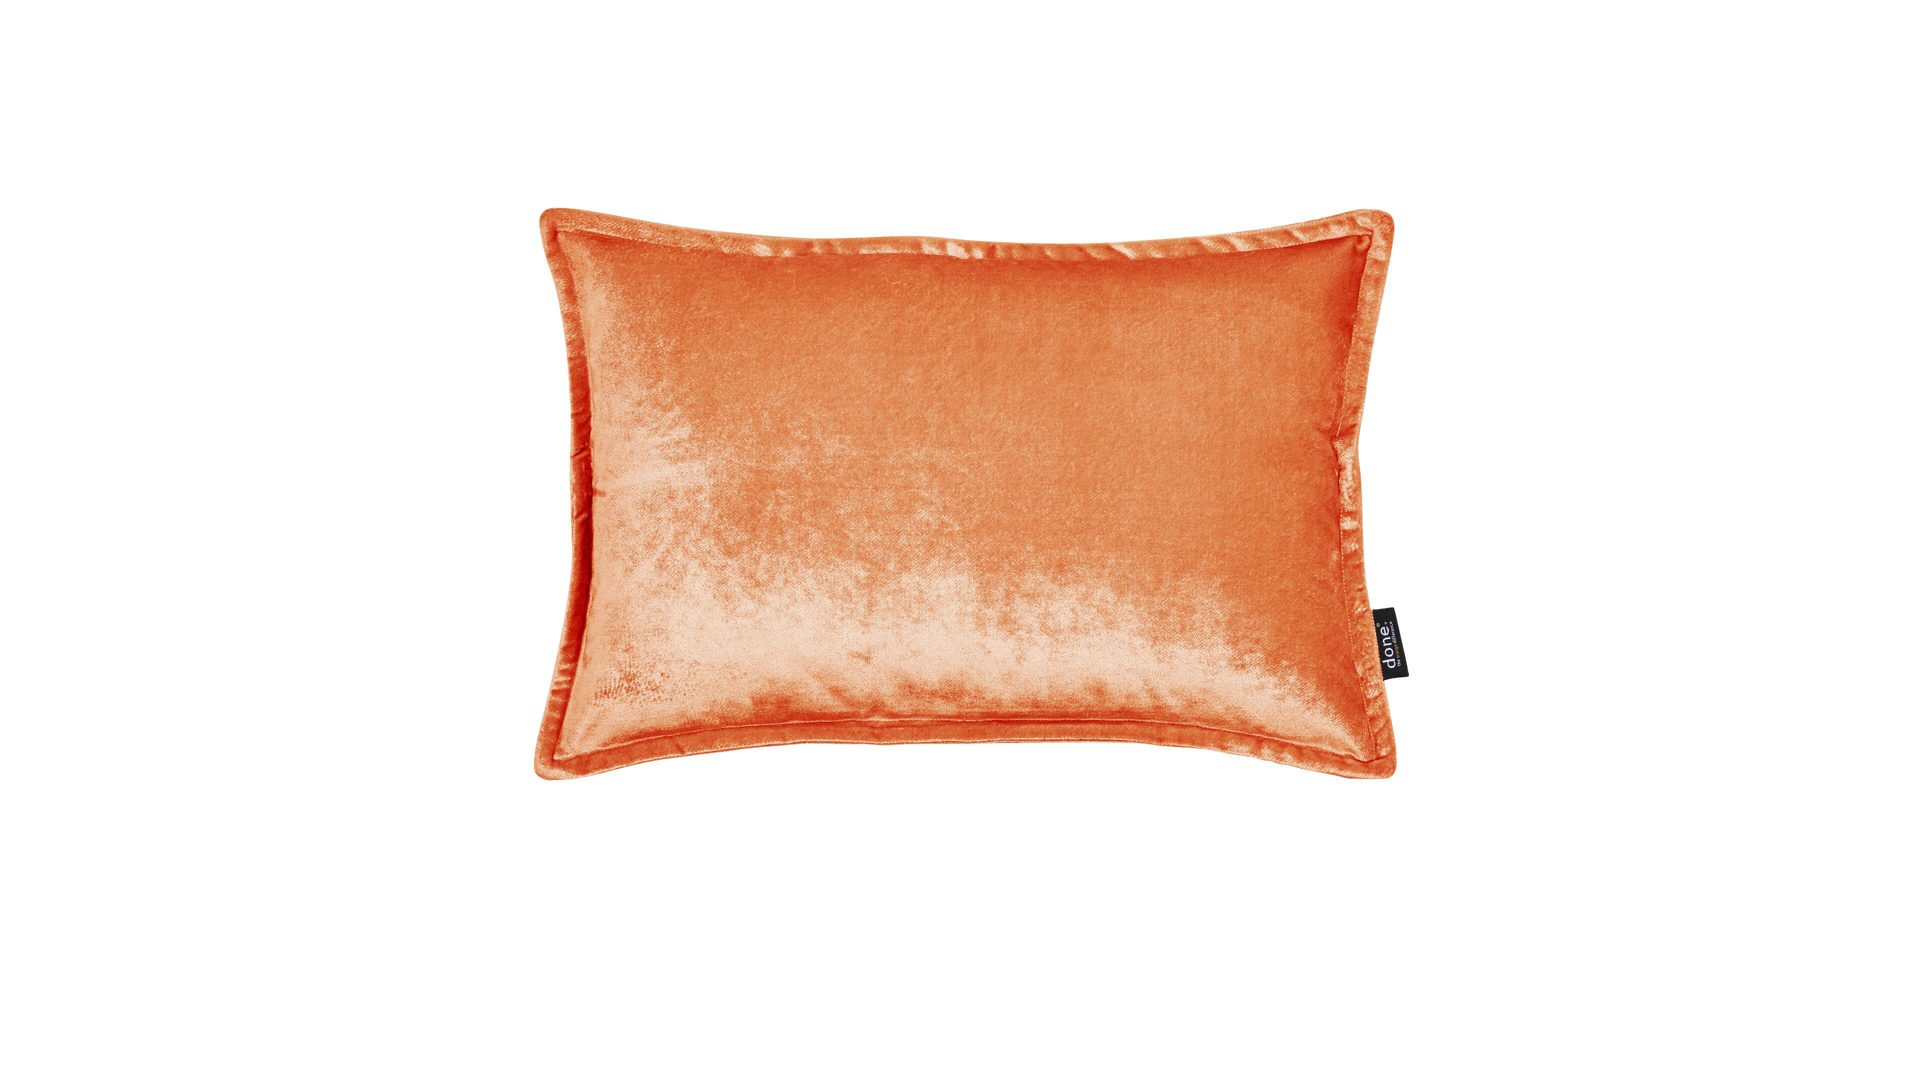 Kissenbezug /-hülle Done by karabel home company aus Stoff in Orange Done Kissenhülle Cushion Glam korallenfarbener Samt – ca. 40 x 60 cm